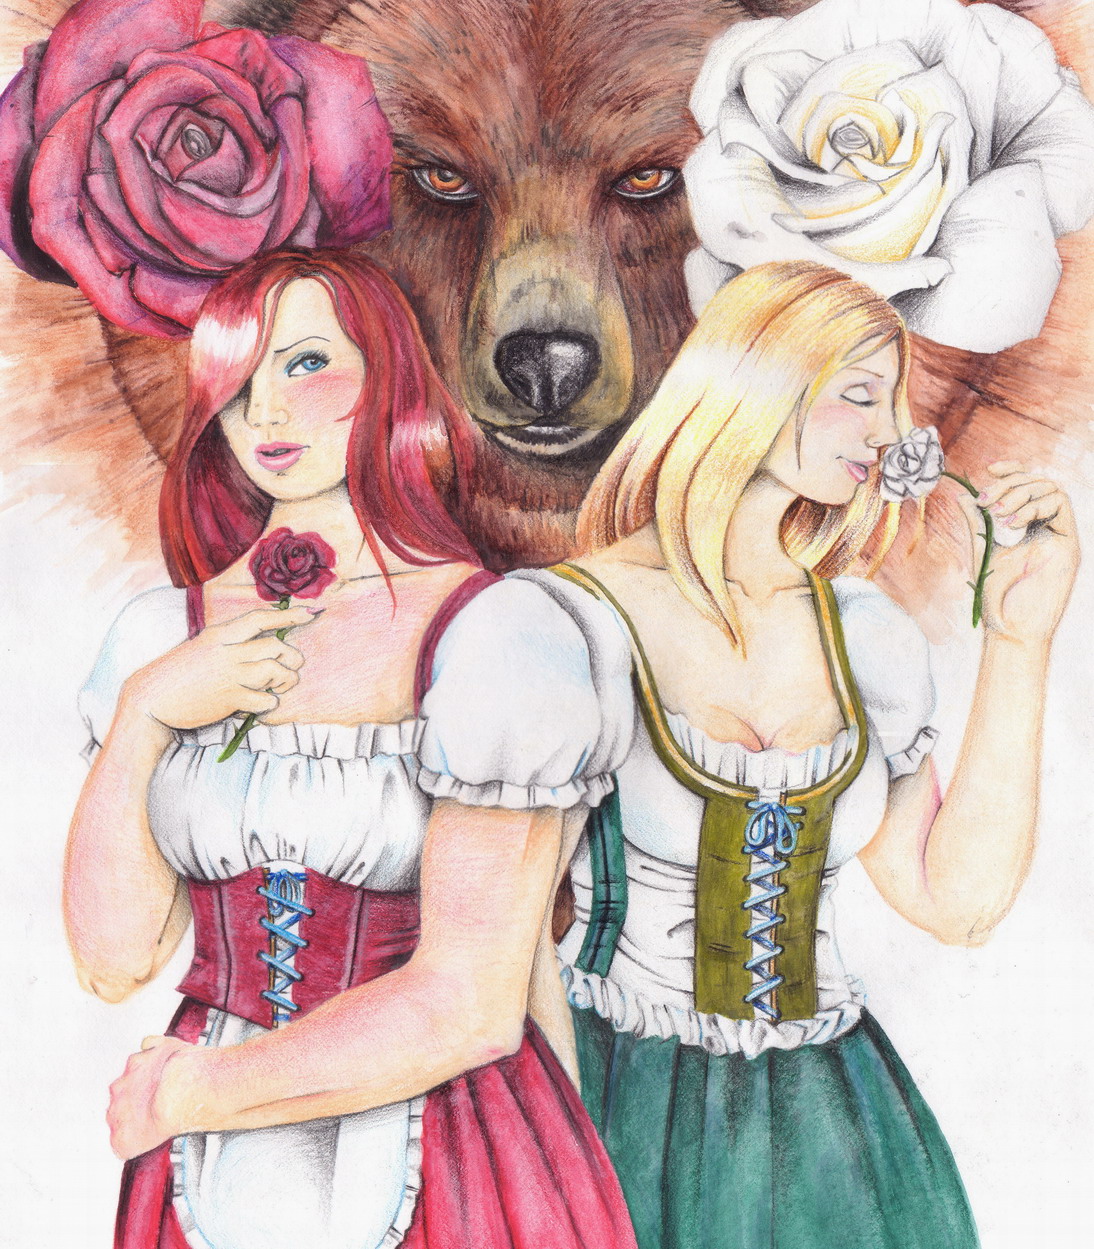 Snow White And Rose Red By Darkjimbo On Deviantart